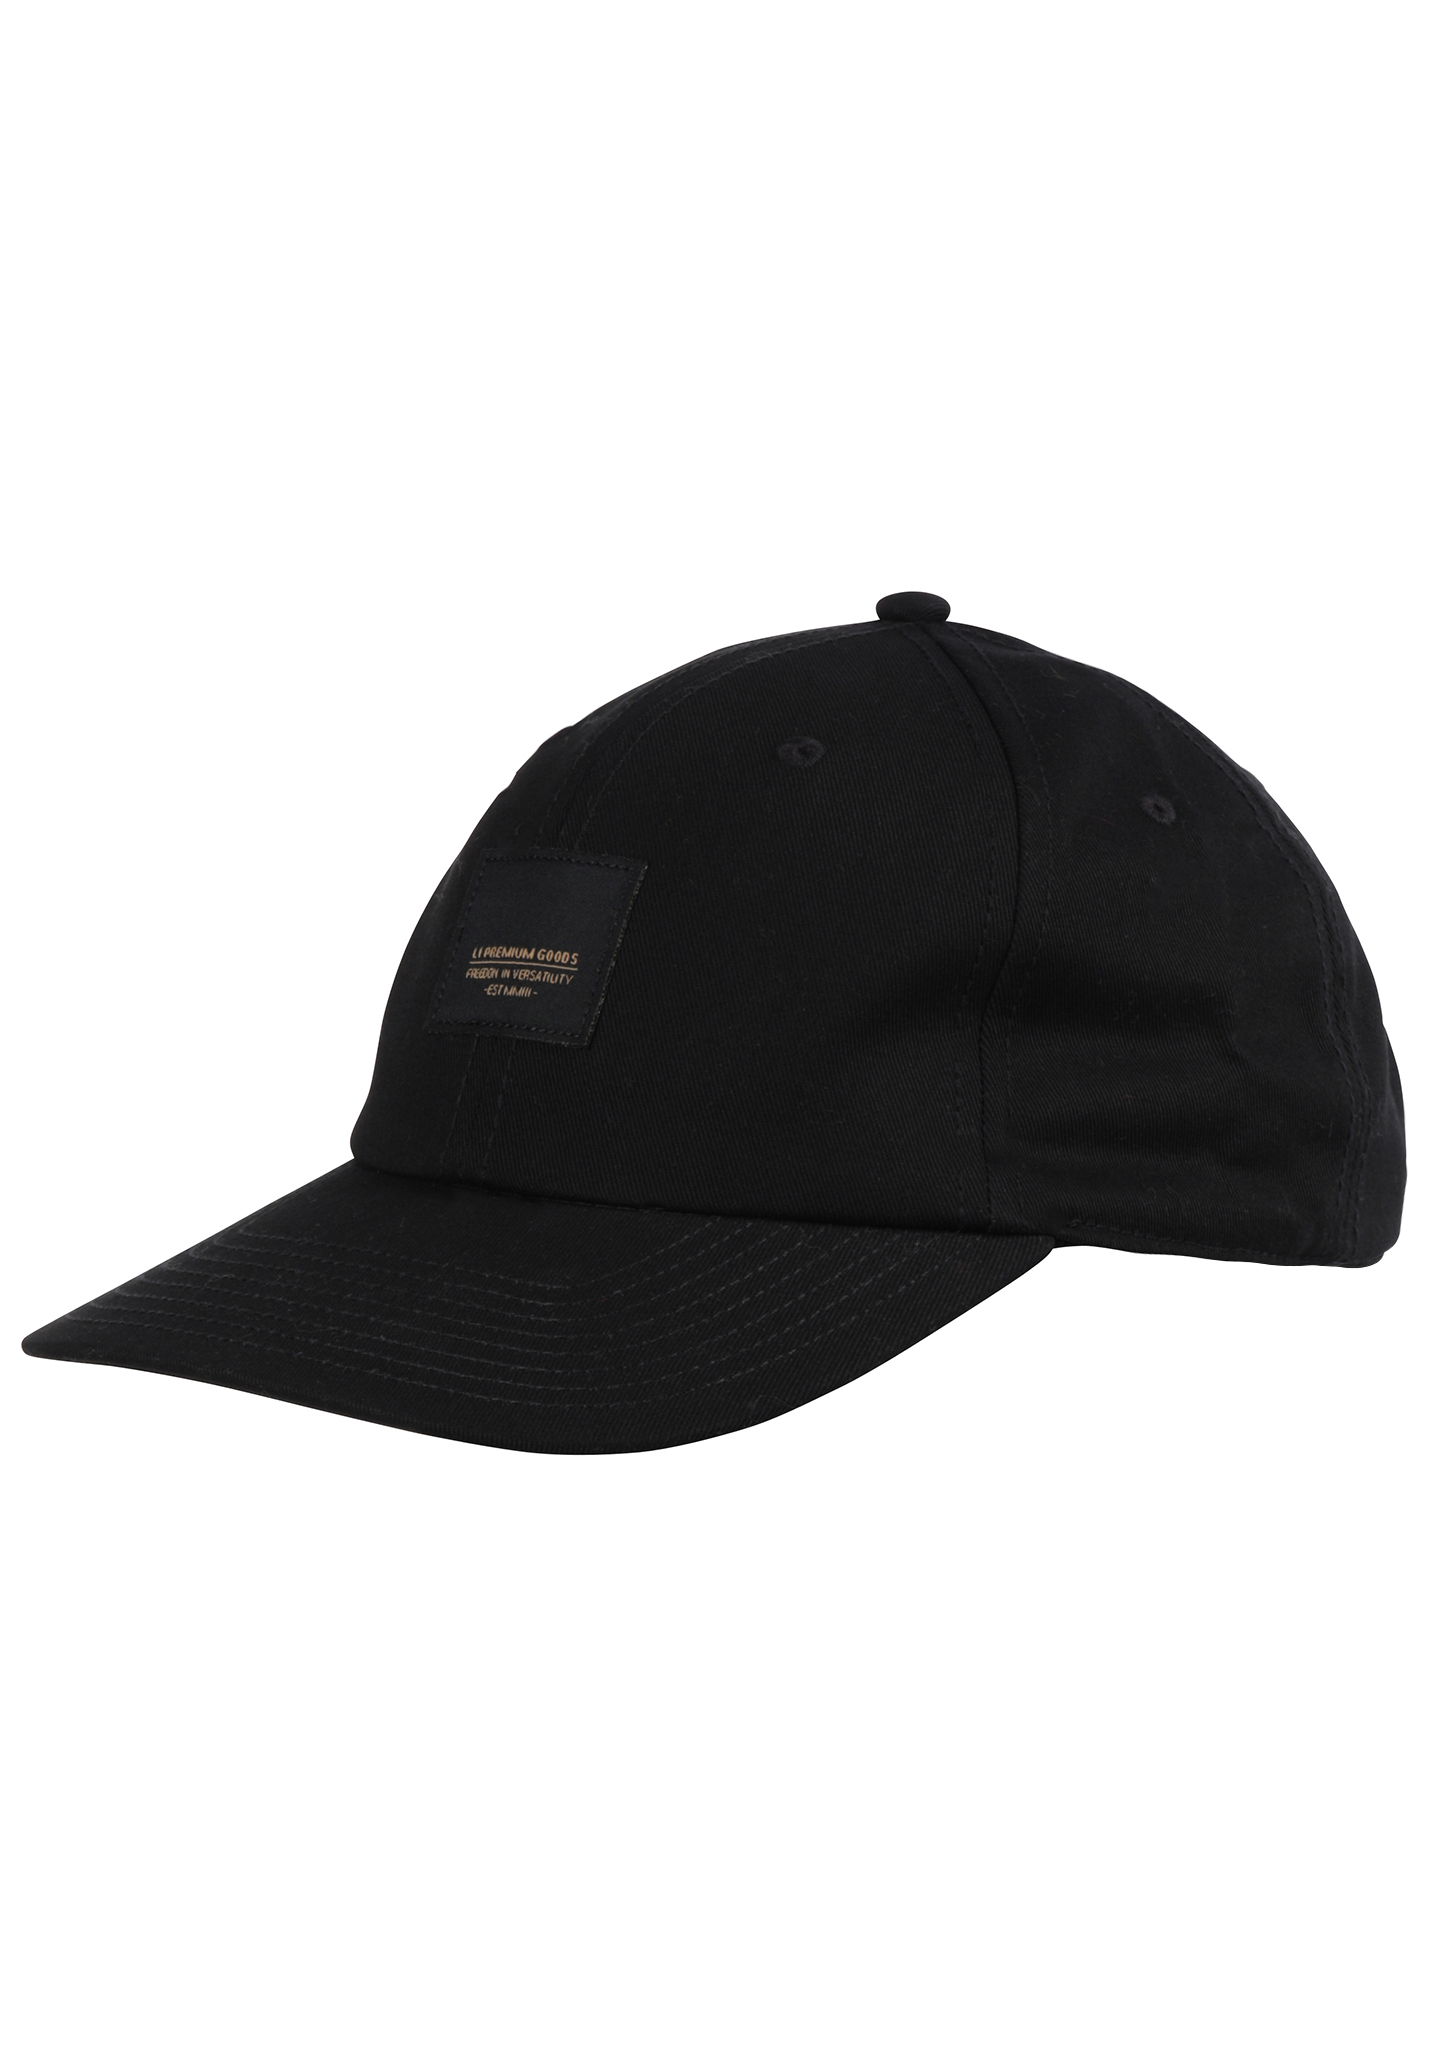 L1 Morgan Strapback Cap black One Size